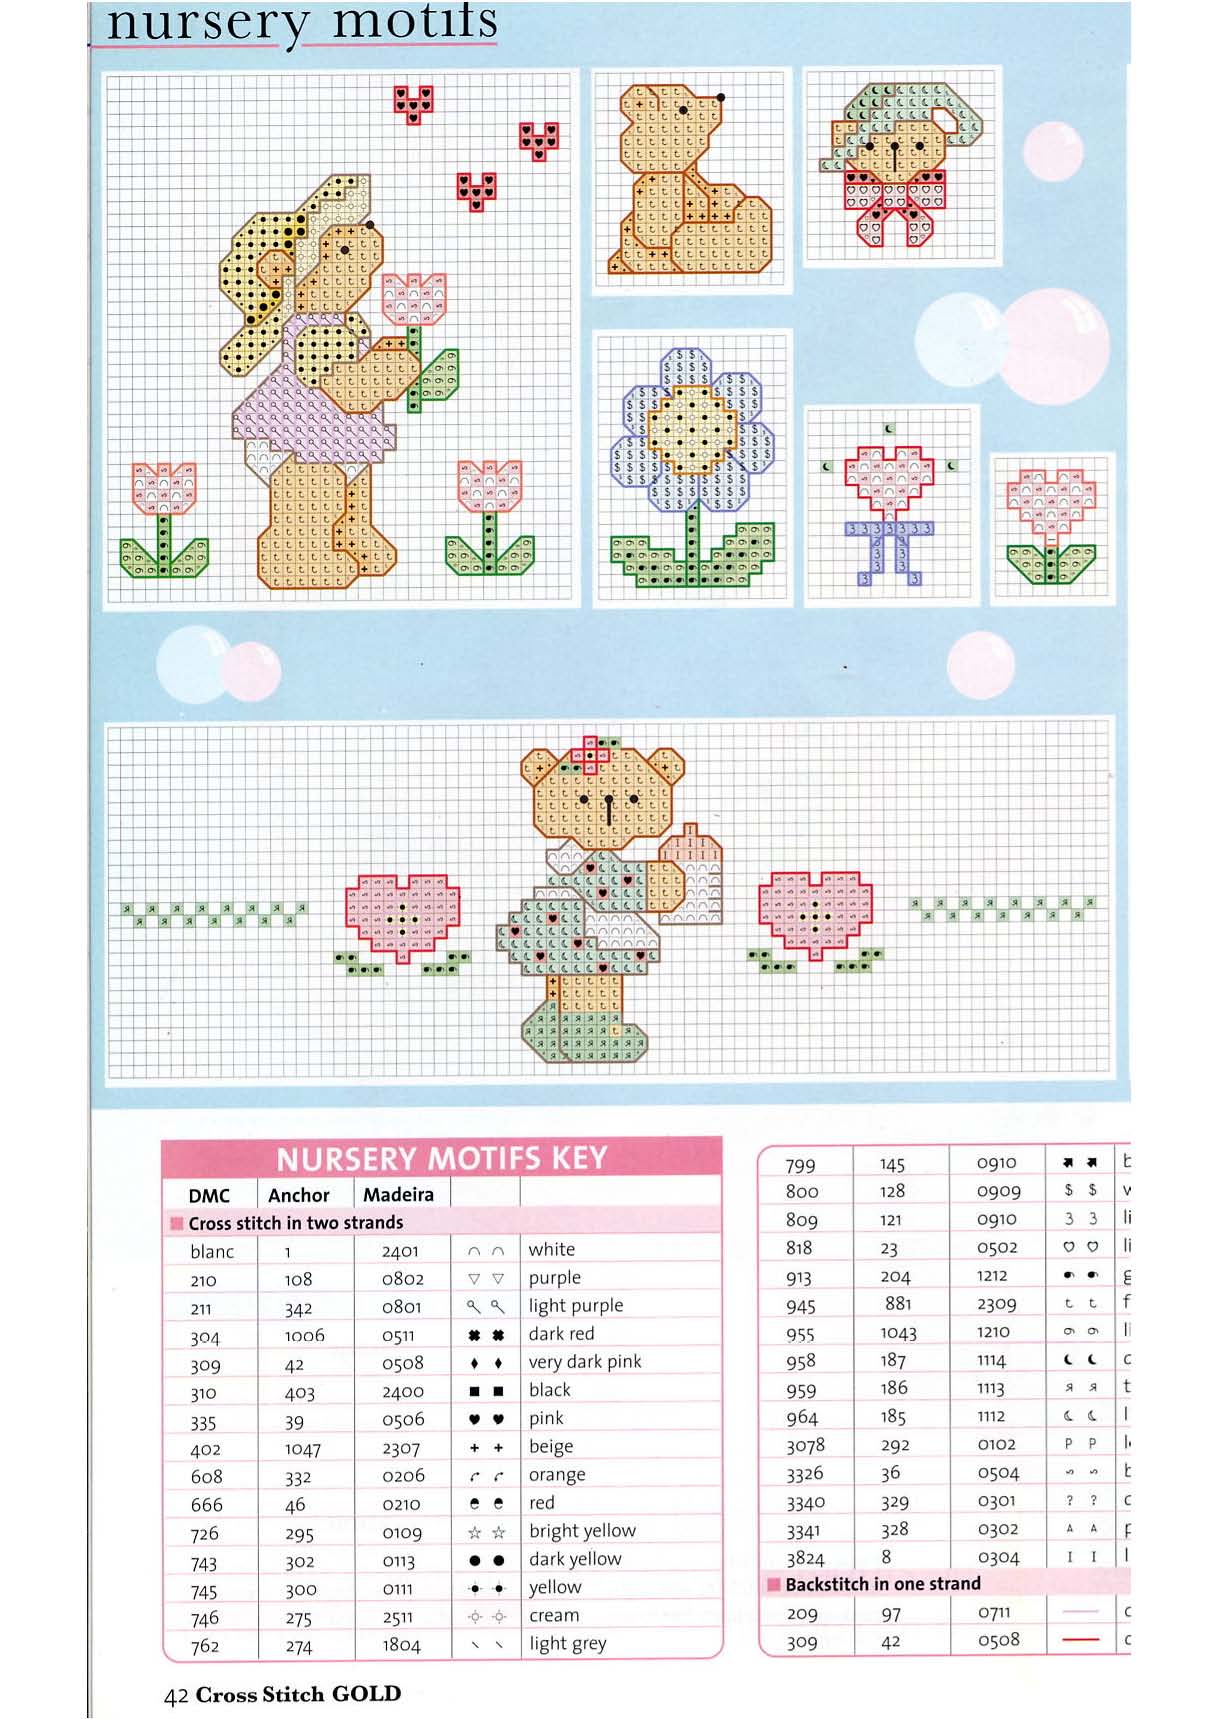 Cross stitch patterns with teddy bears for nursery set (1)